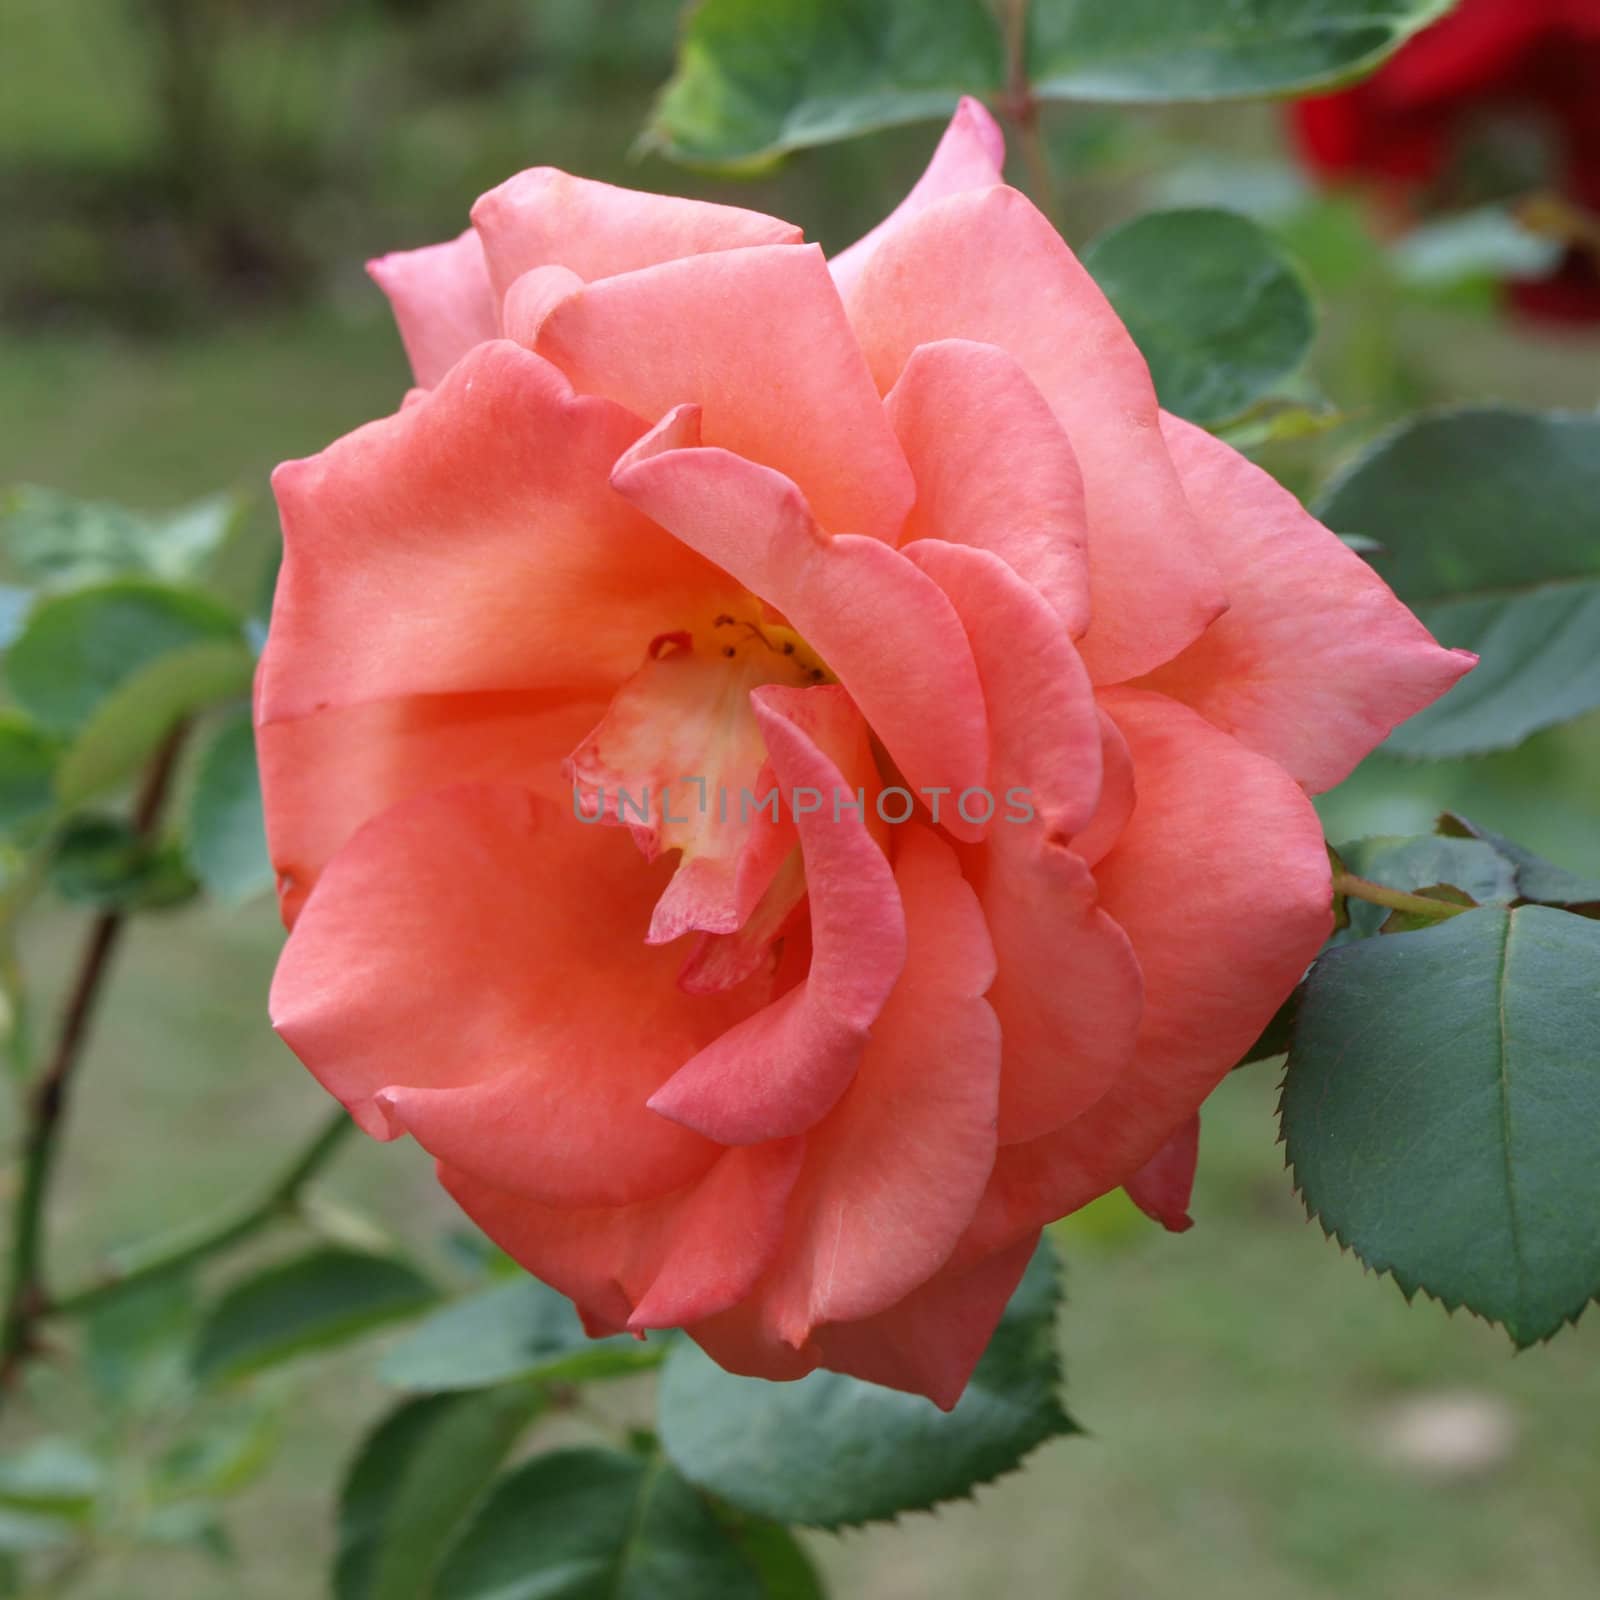 Roses on a bush in a garden 